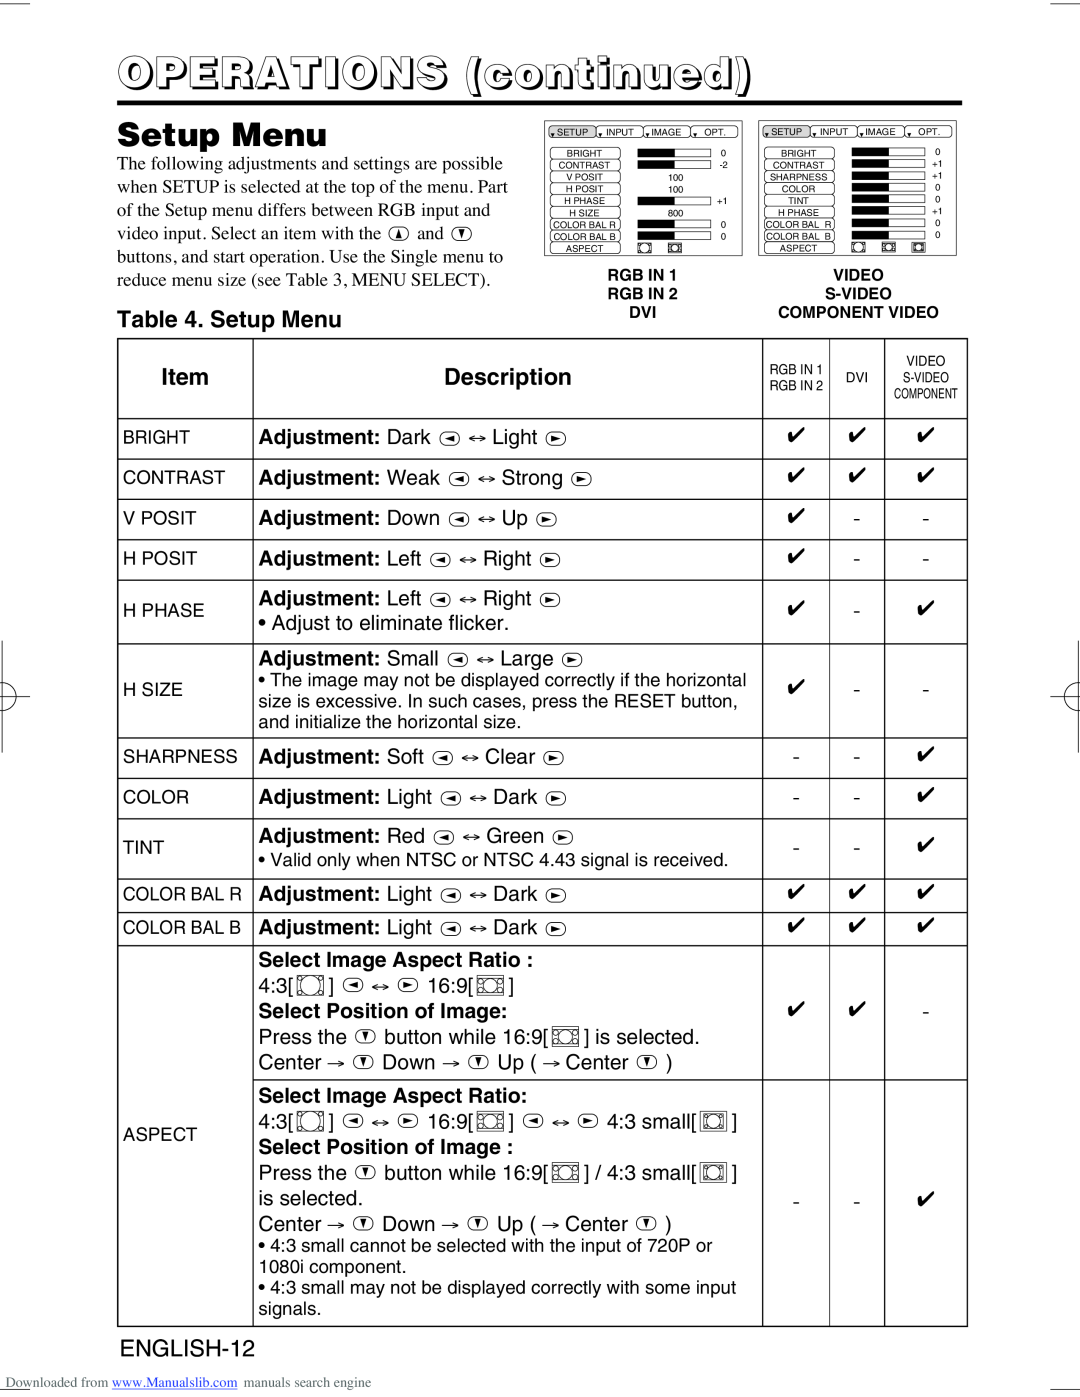 Hitachi CP-X995W user manual Setup Menu, OPERATIONS continued, Description, ENGLISH-12 